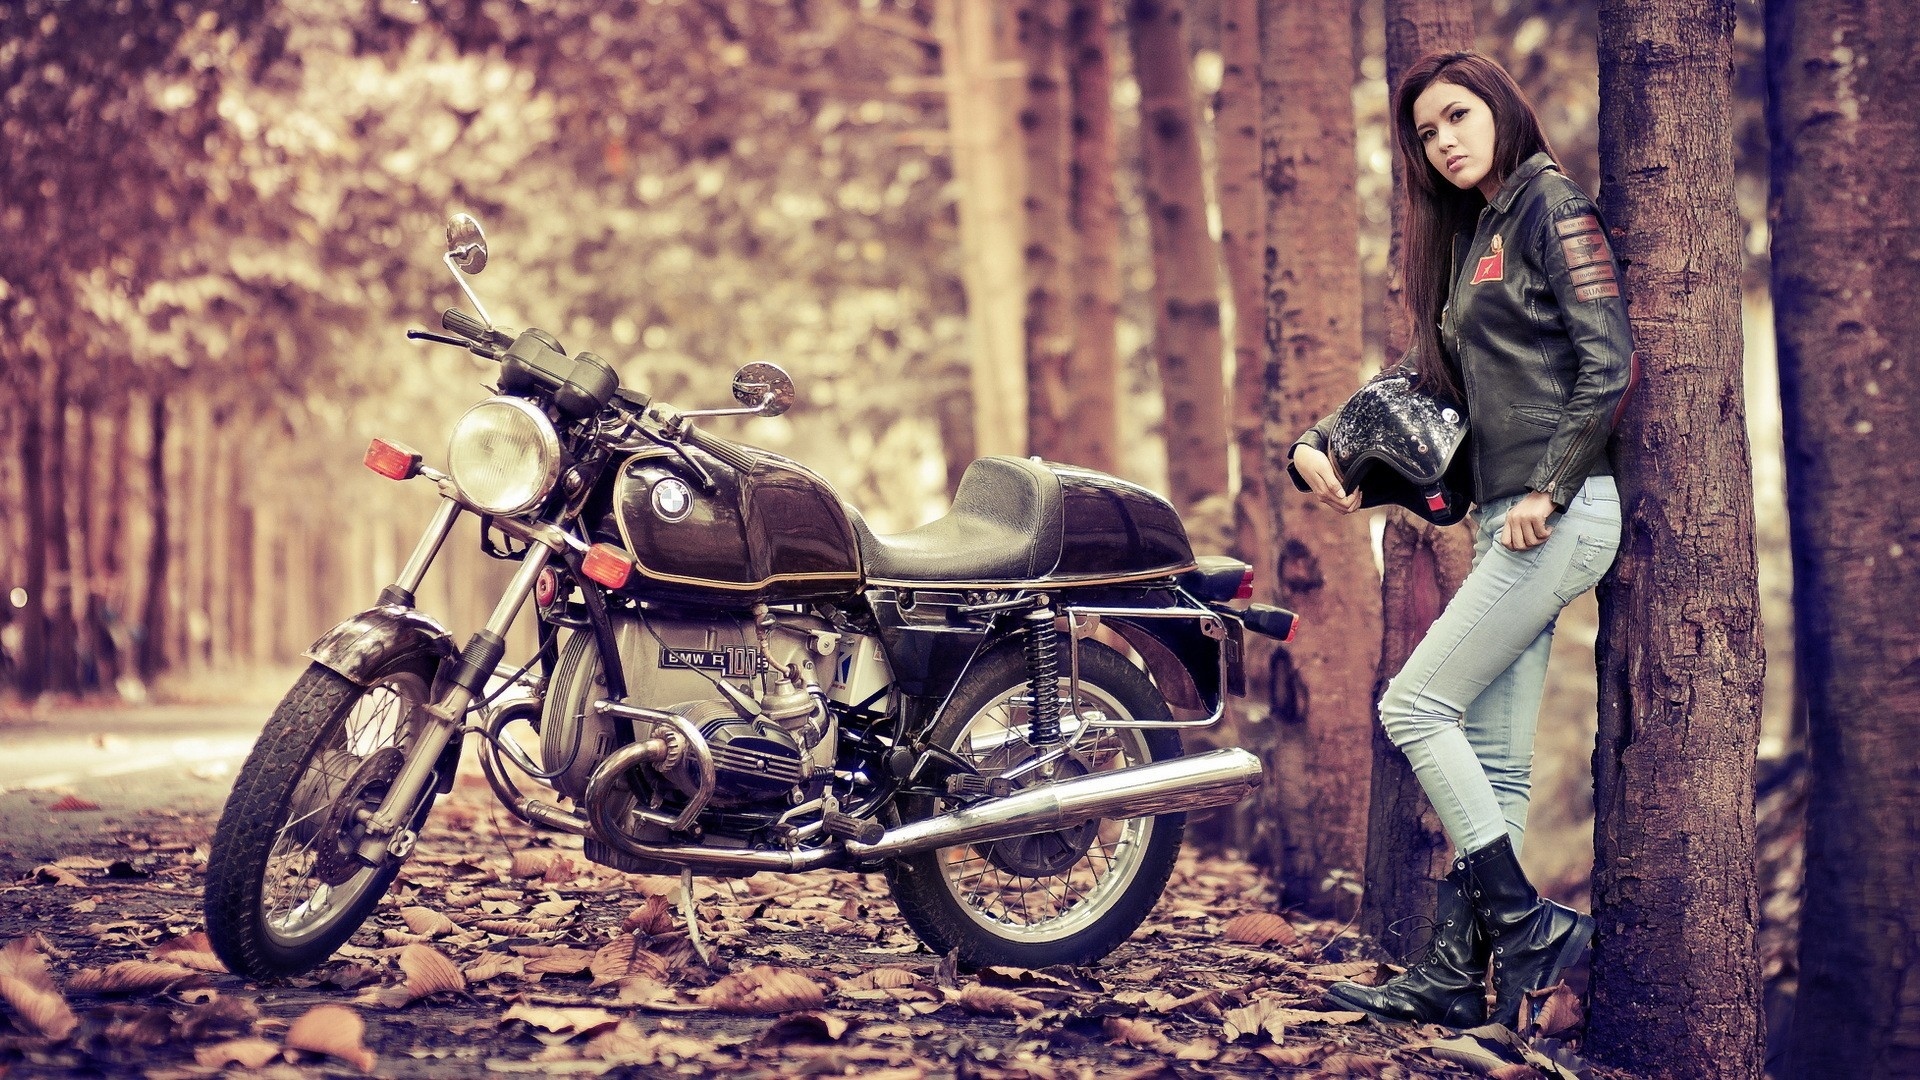 vehicles, Motorcycles, Bikes, Roads, Autumn, Fall, Leaves, Women, Females, Girls, Models, Brunttes Wallpaper